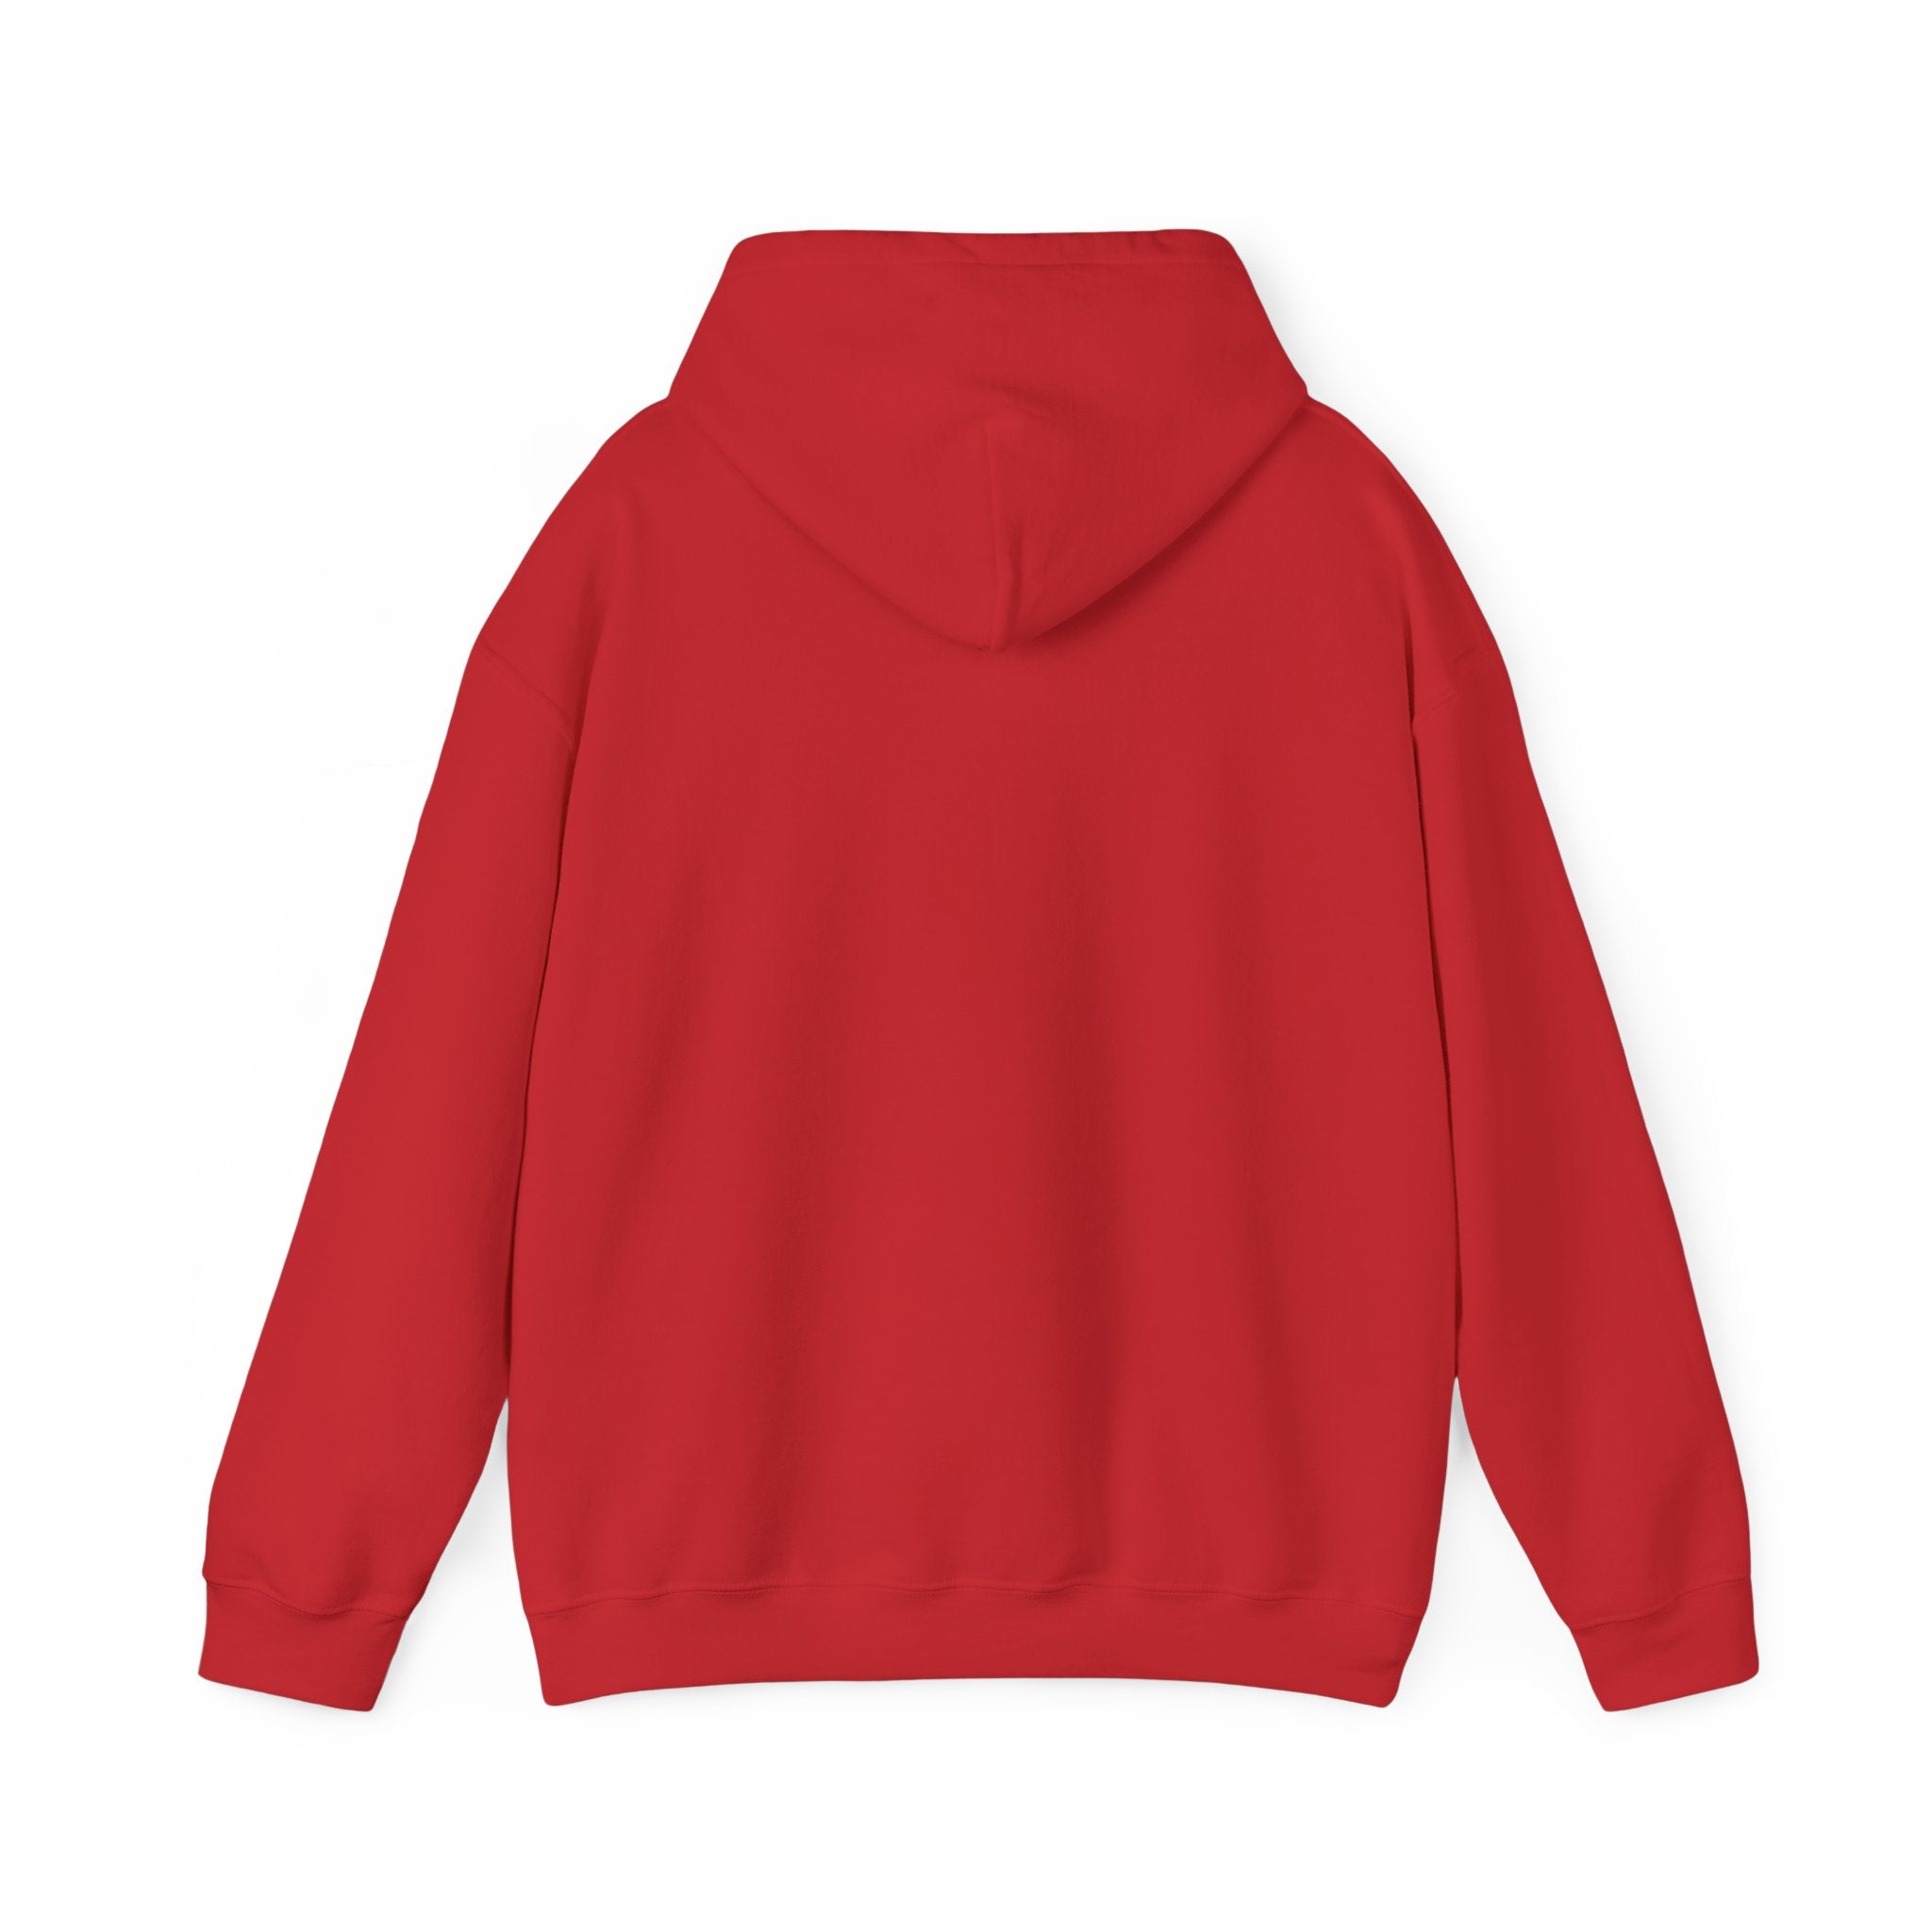 PoP! Unisex Hooded Sweatshirt - Just a Phase